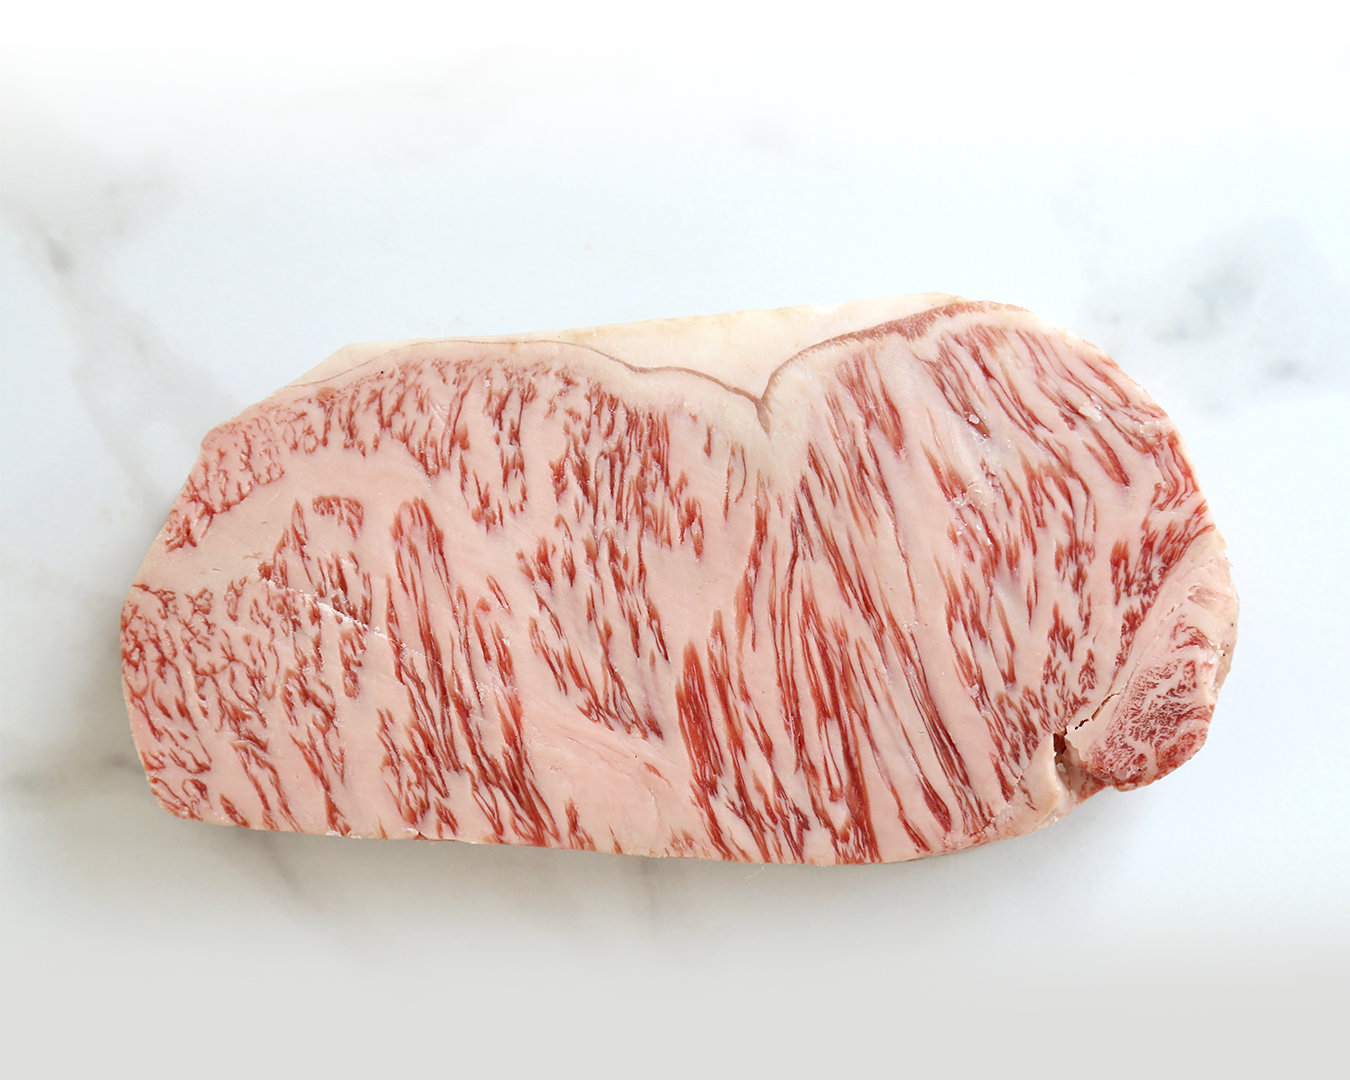 Buy Japanese Wagyu A5 Beef Striploin Steak